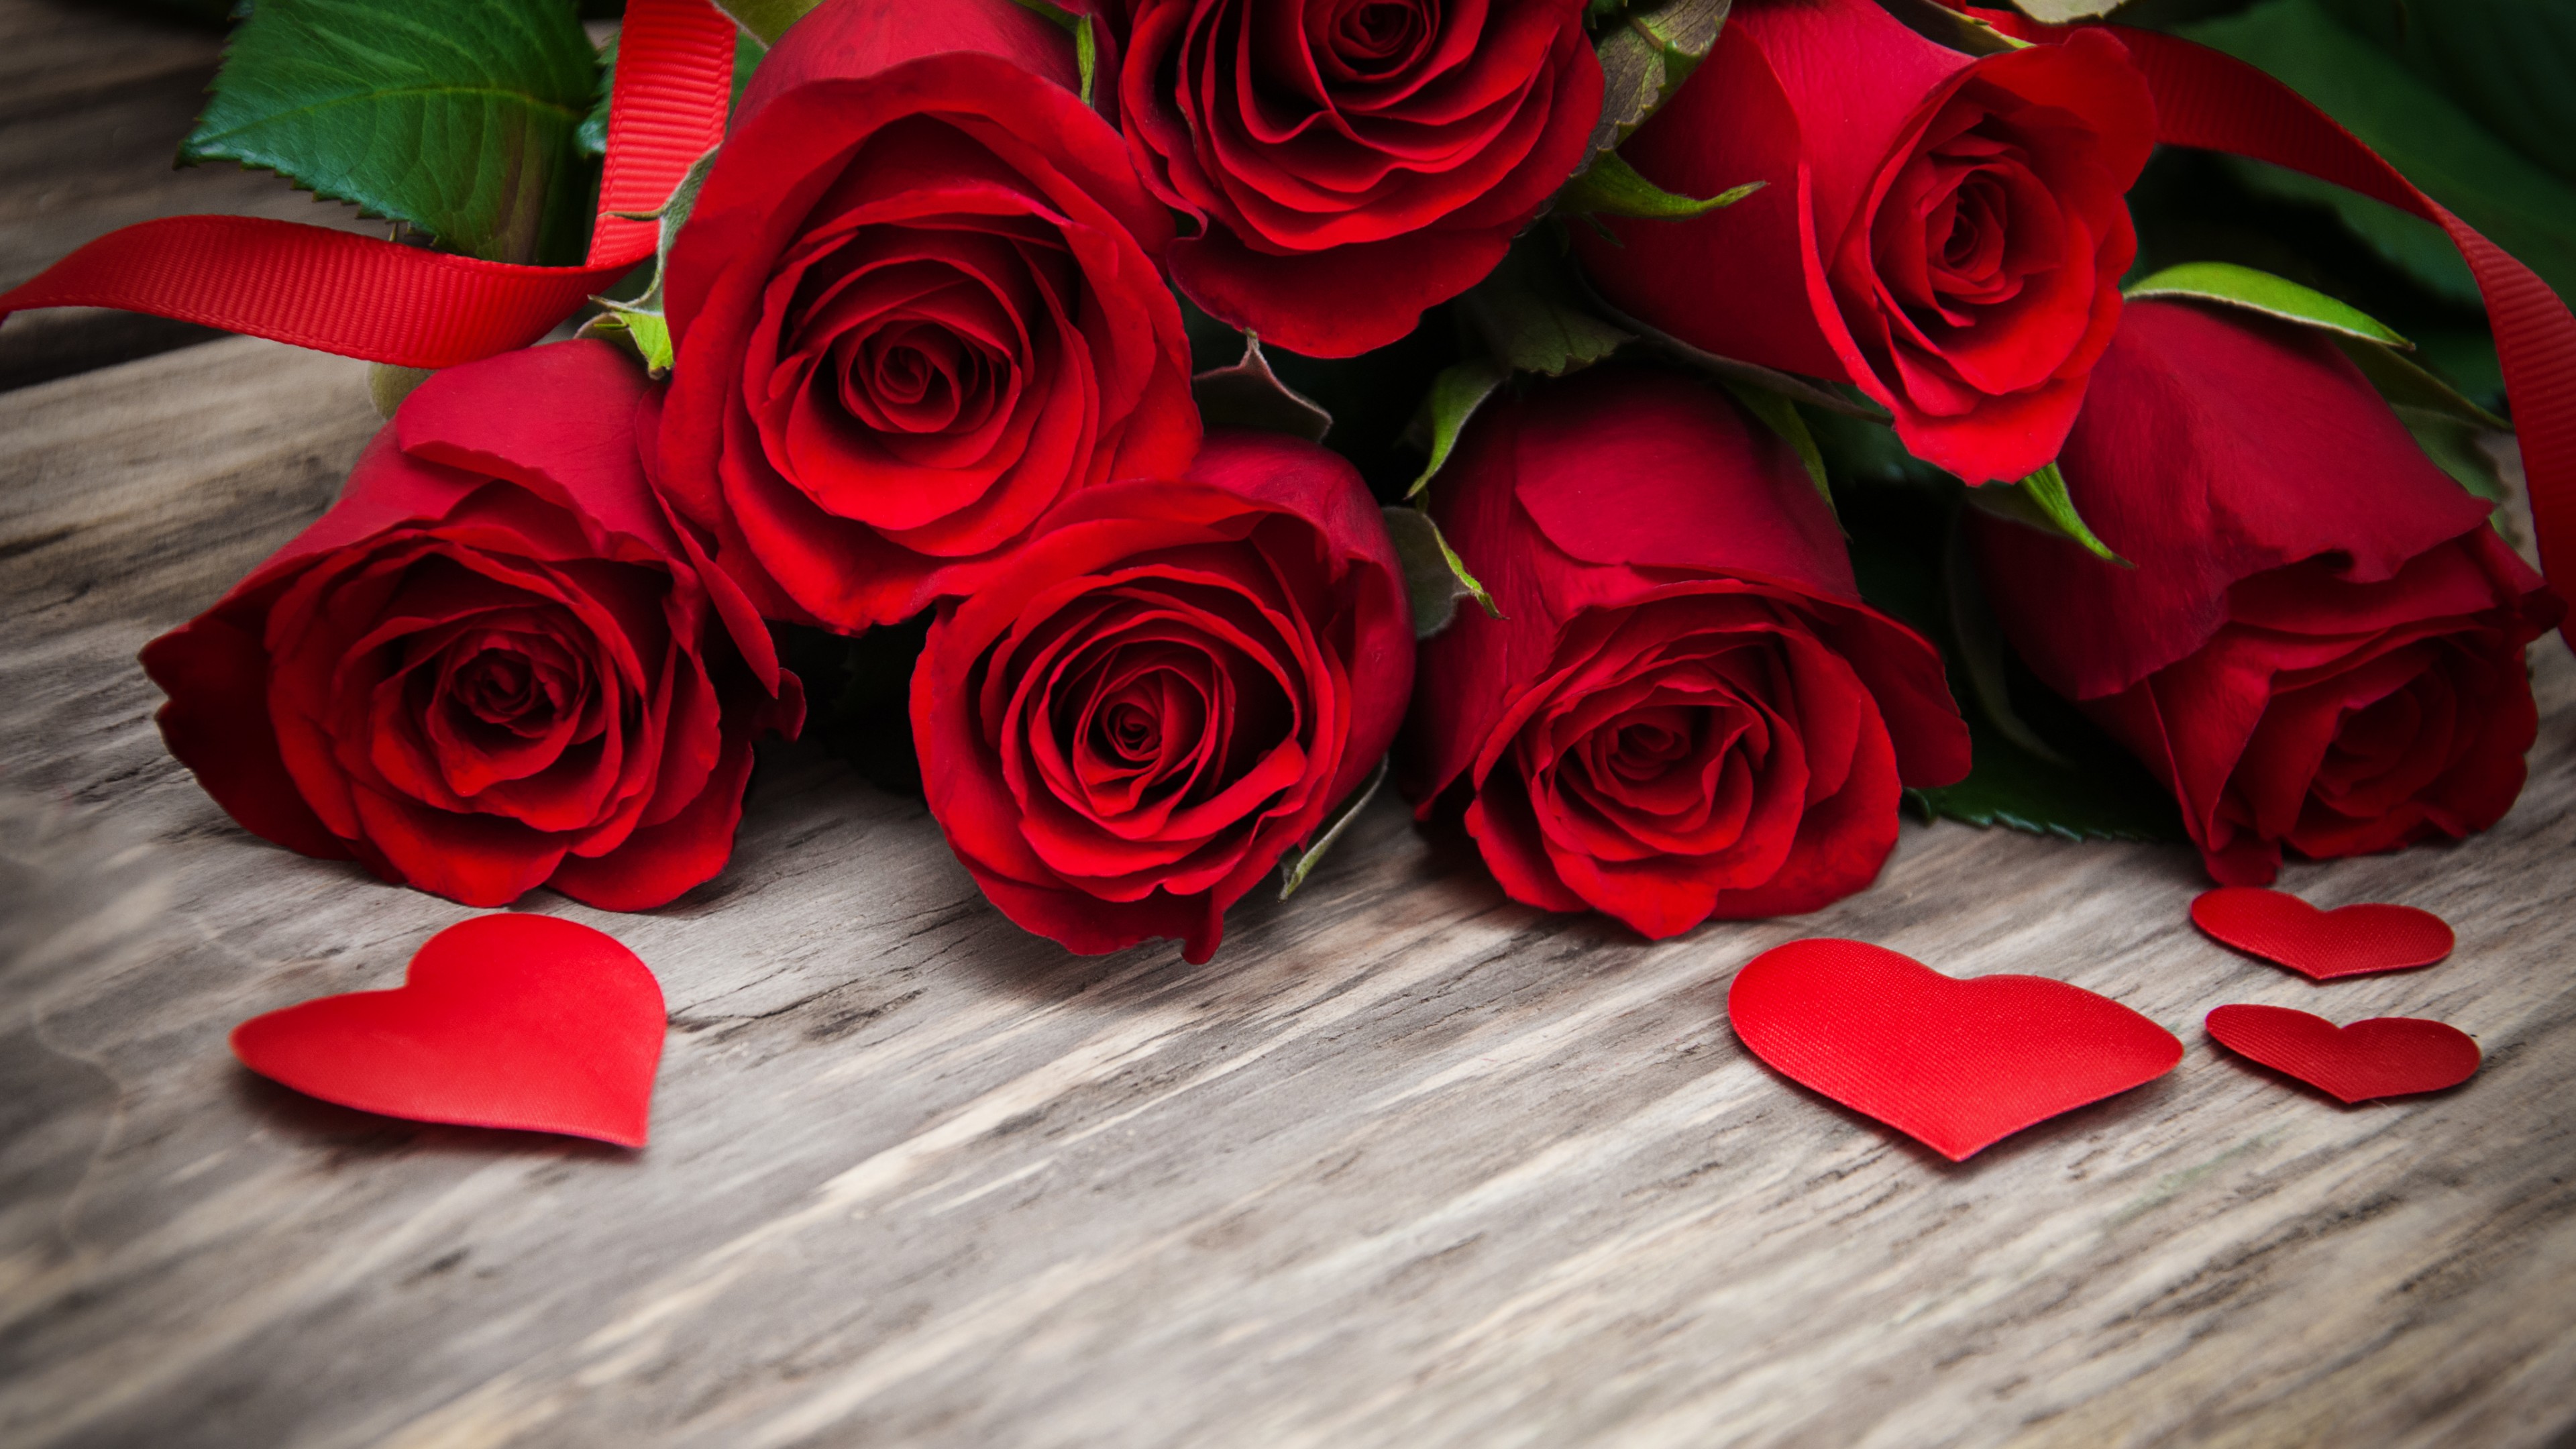 Wallpaper Valentine's Day, February flowers, roses, 4k, Holidays